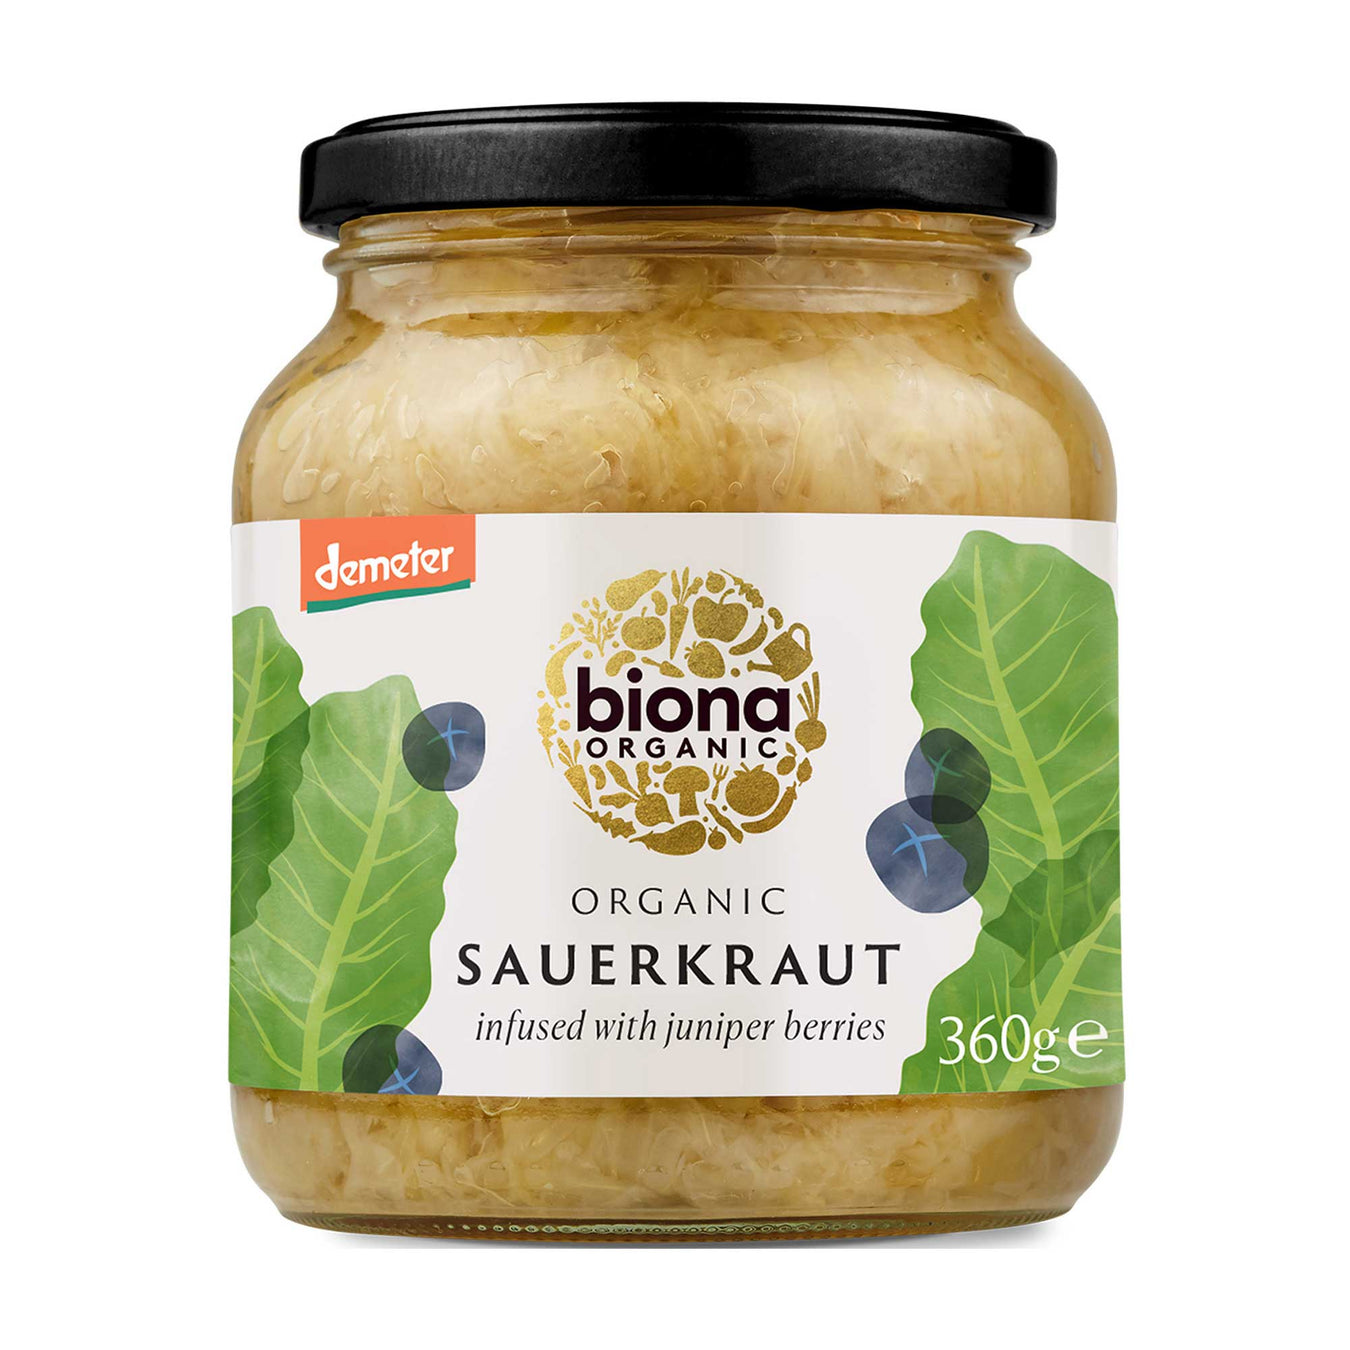 Biona Sauerkraut Range Half Price